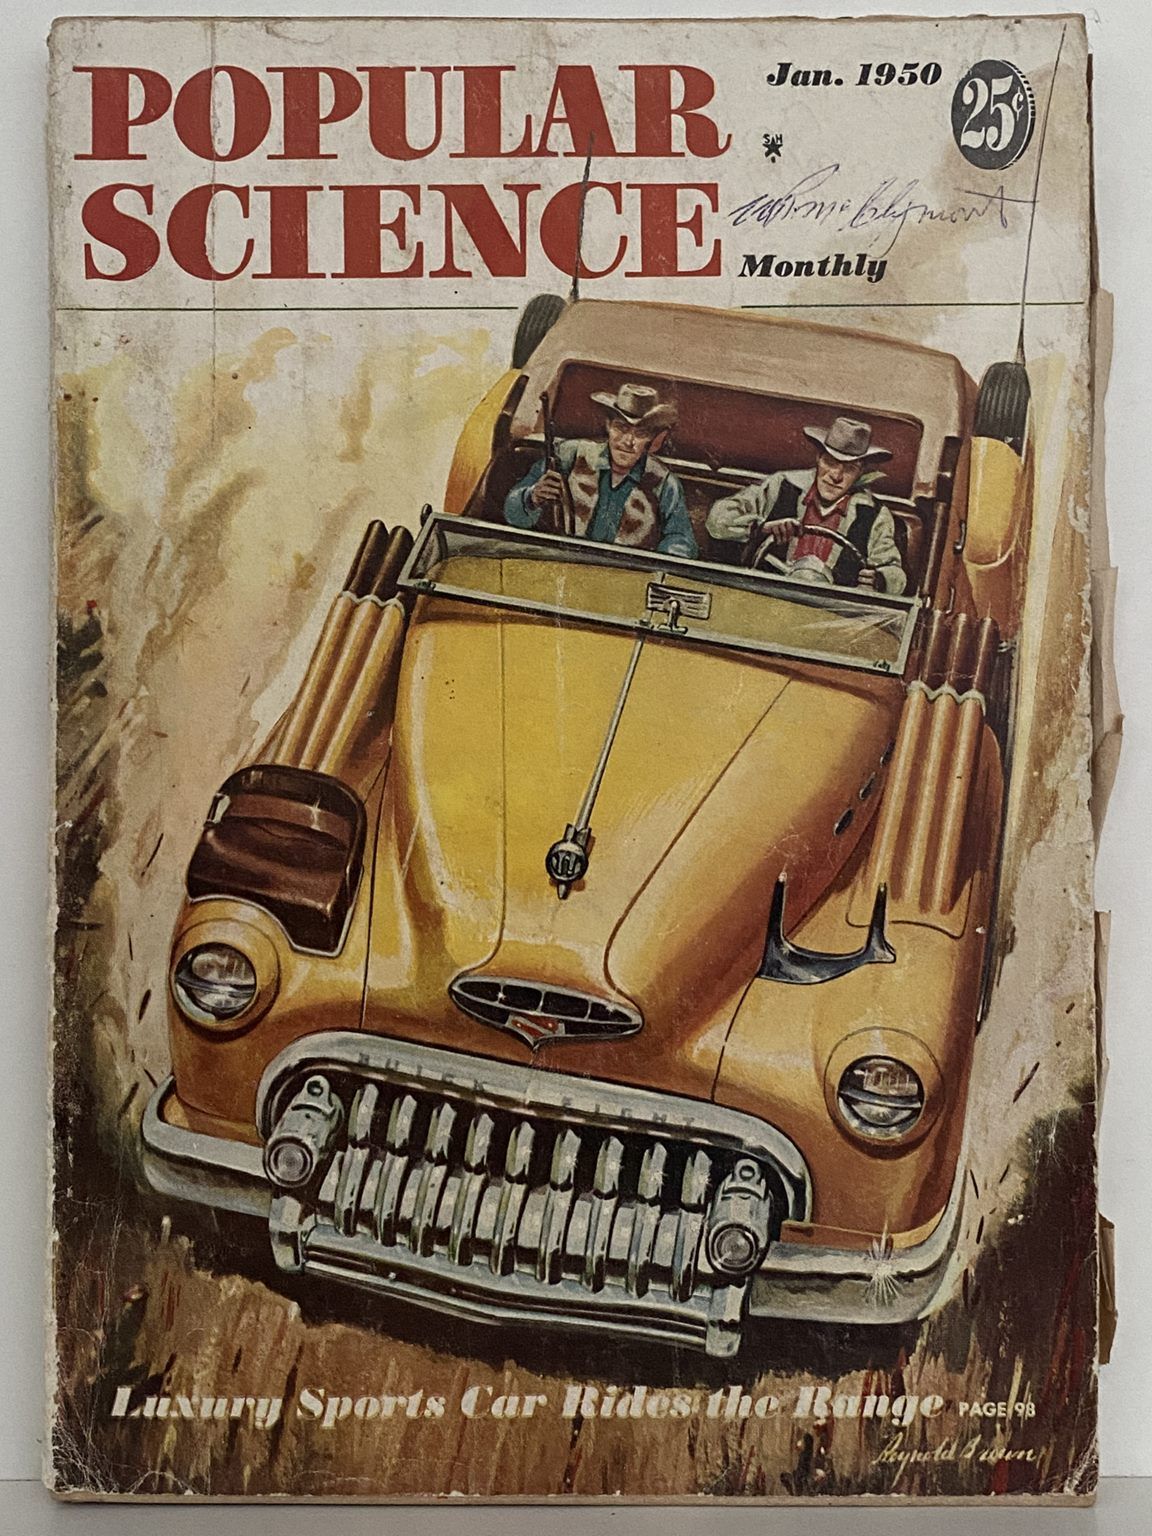 VINTAGE MAGAZINE: Popular Science, Vol. 156, No. 1 - January 1950